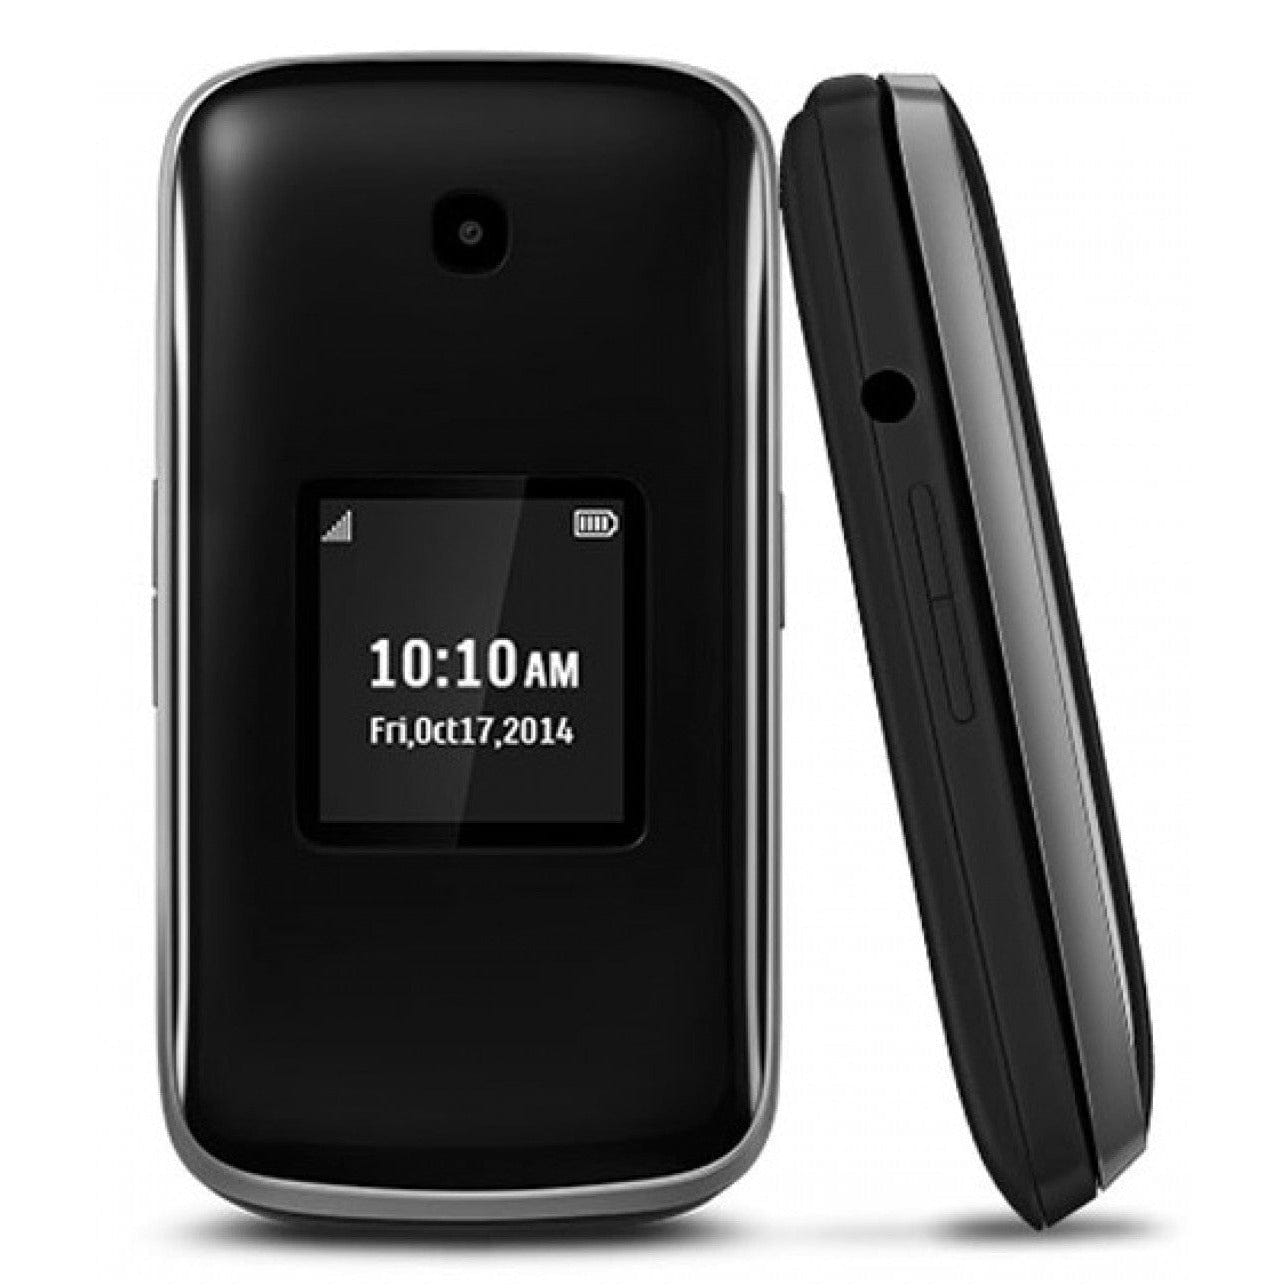 Alcatel ONETOUCH Fling - Black-Silver - Boost Mobile - CDMA